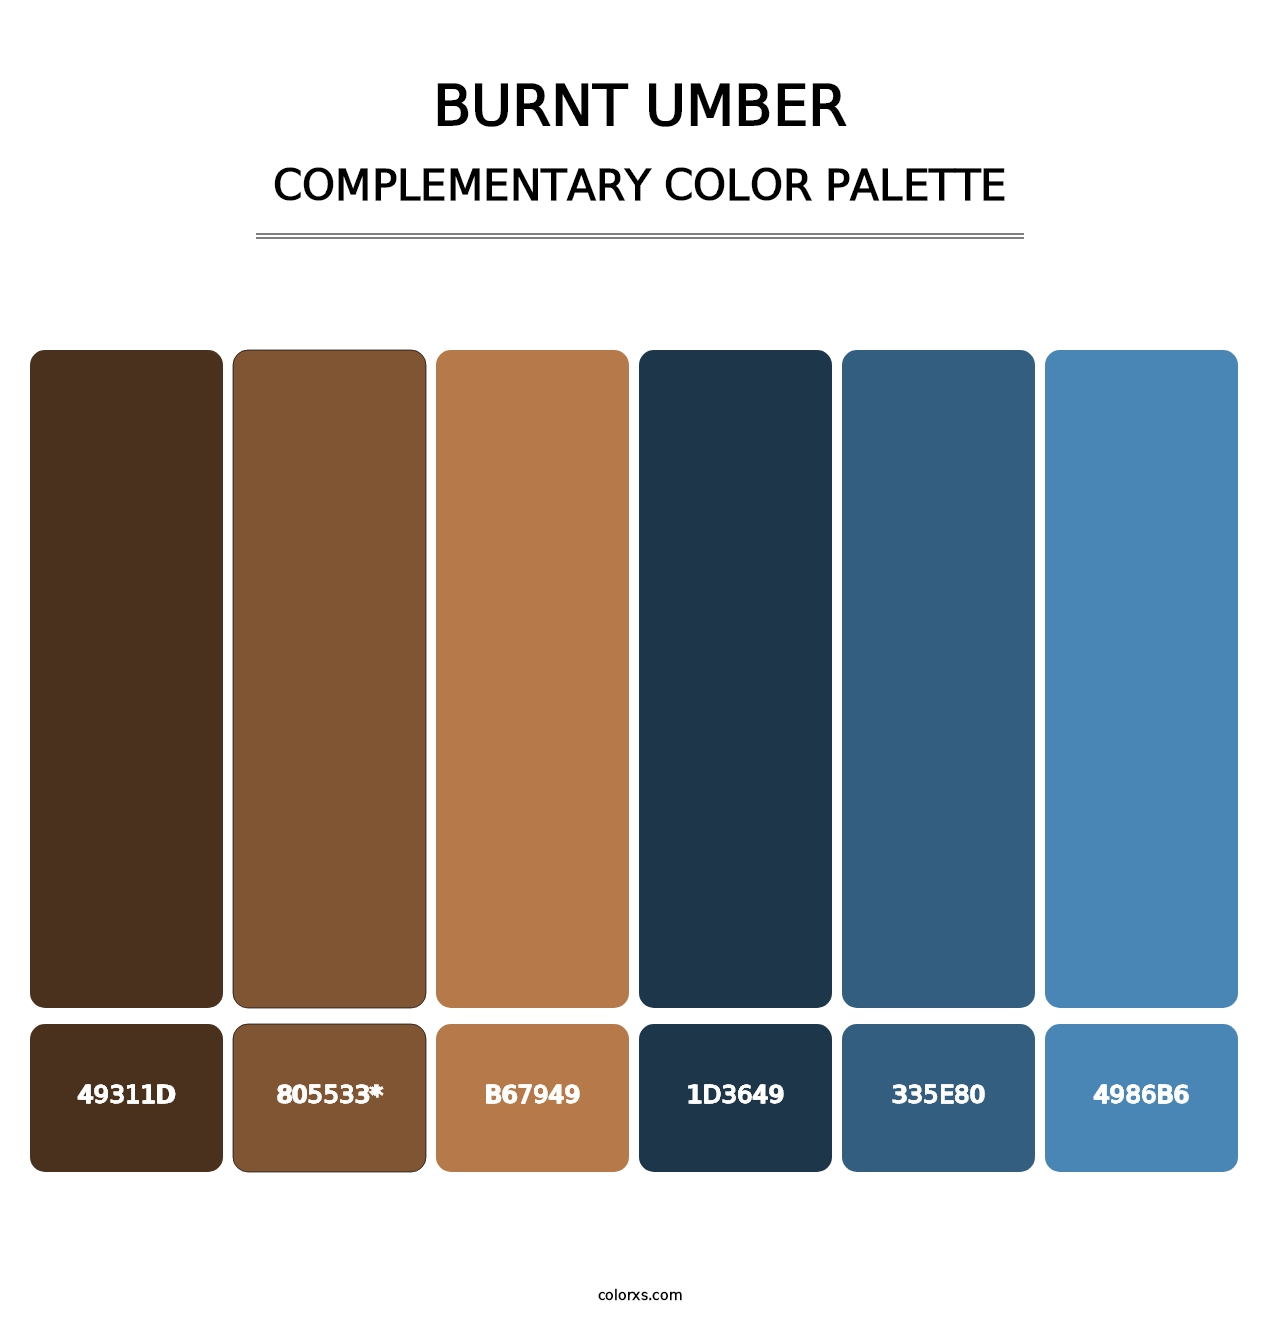 Burnt Umber - Complementary Color Palette